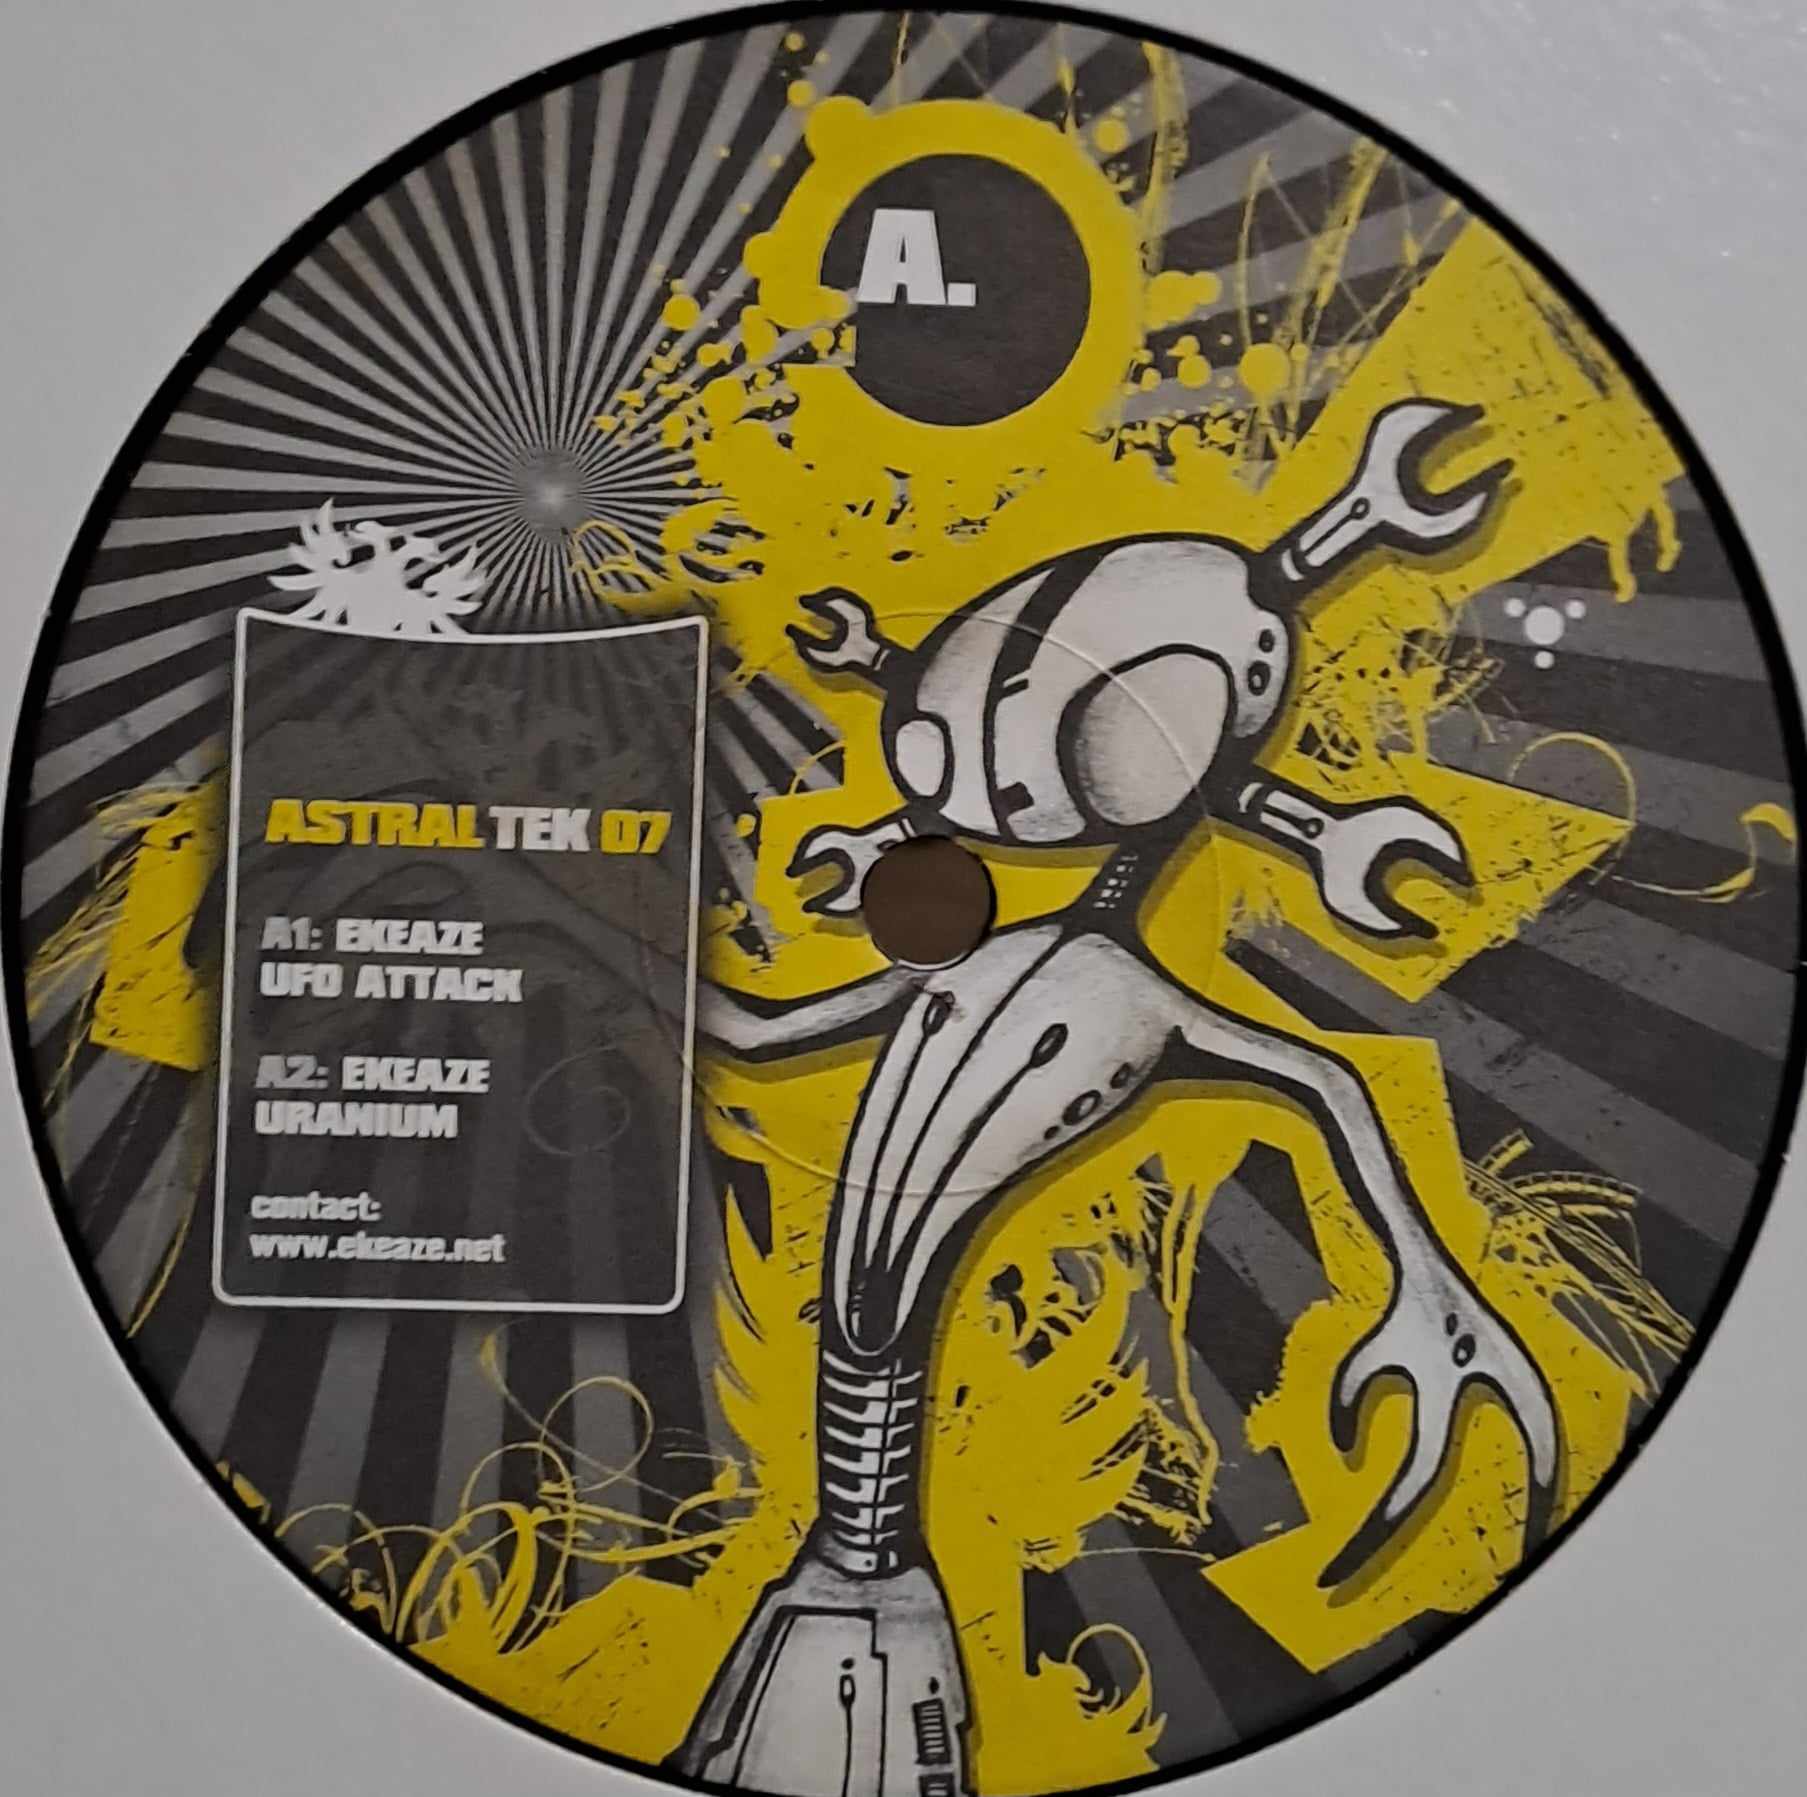 Astral Tek 07 - vinyle acid